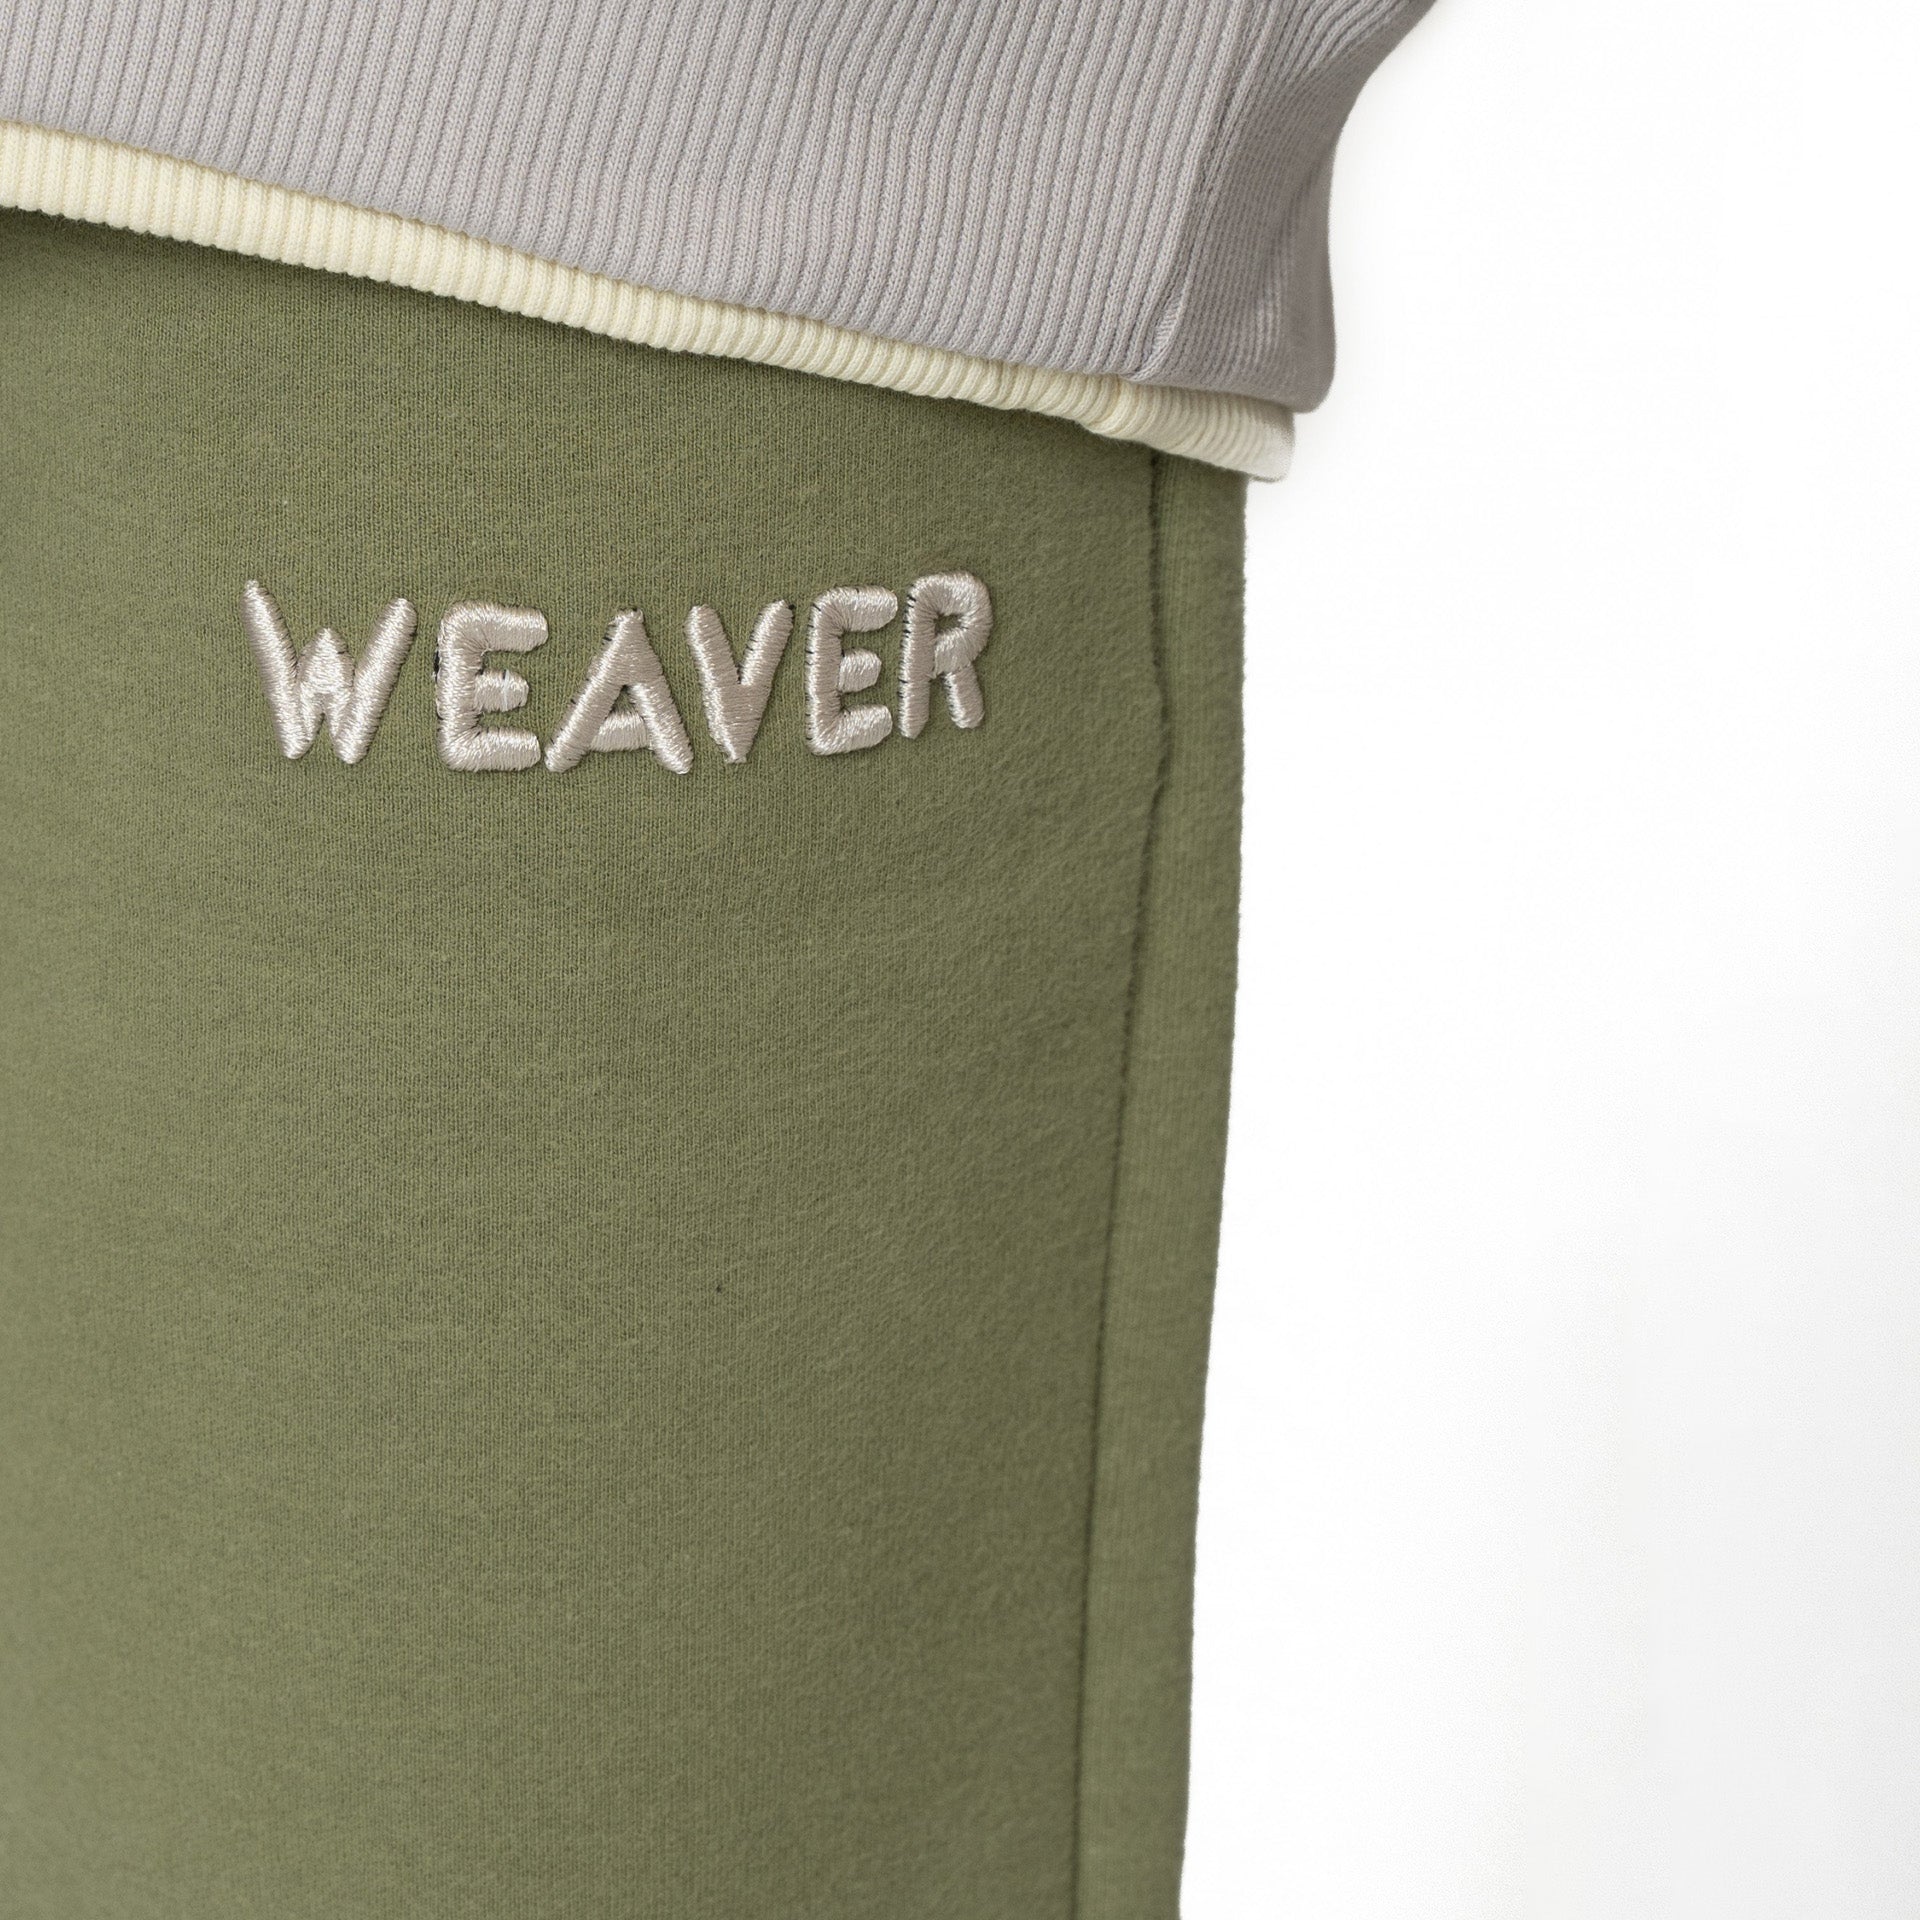 Green Kids Pants By Weaver Design